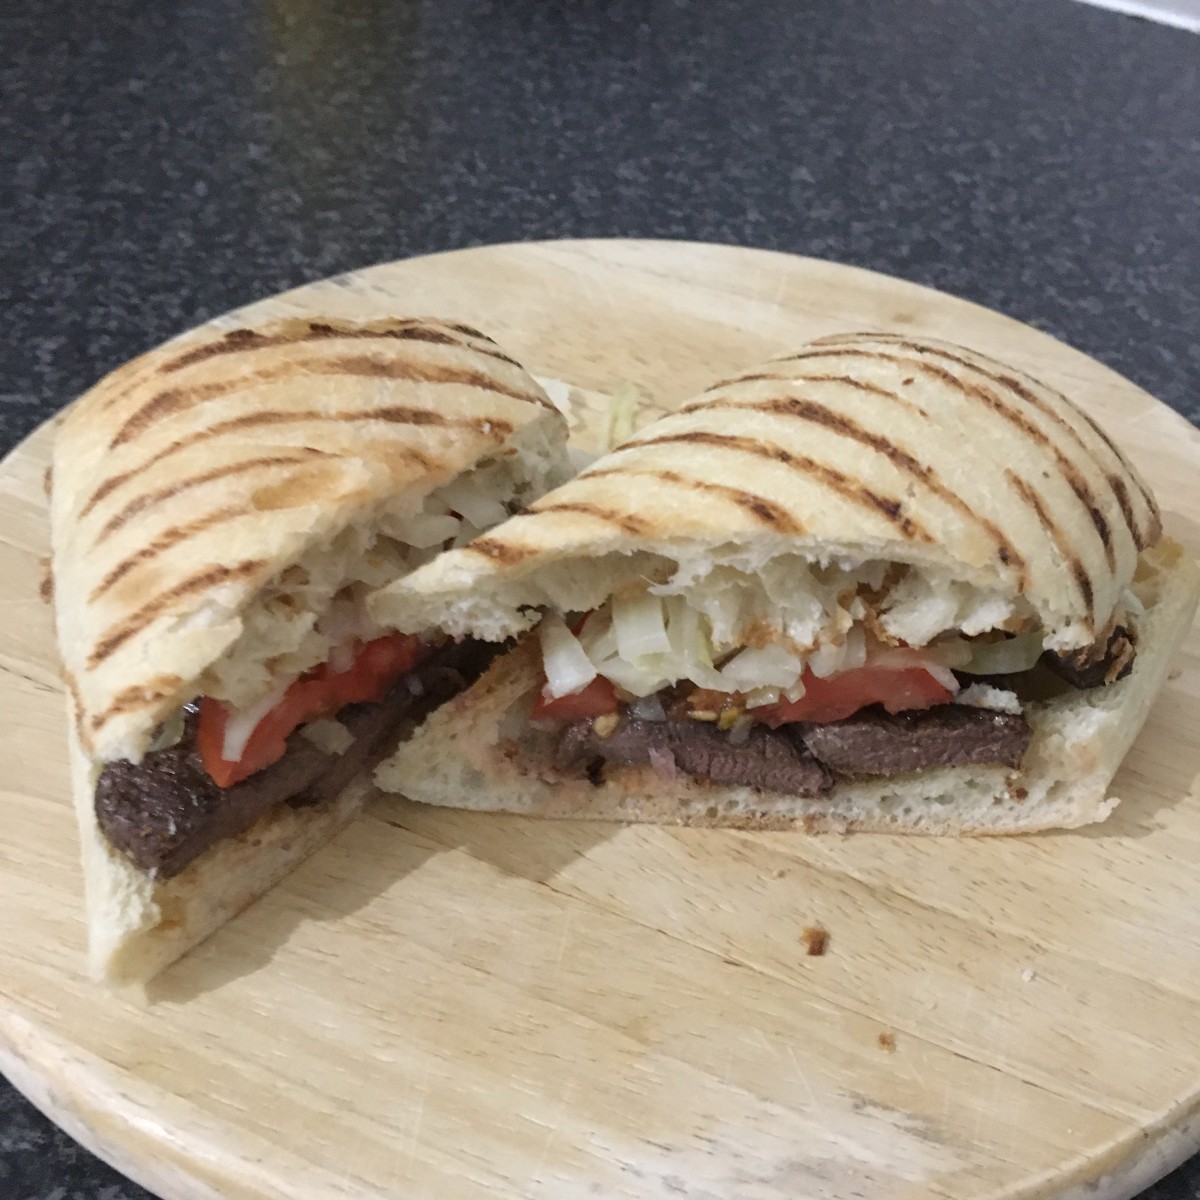 Wild goose, tomato and chilli sauerkraut panini sandwich